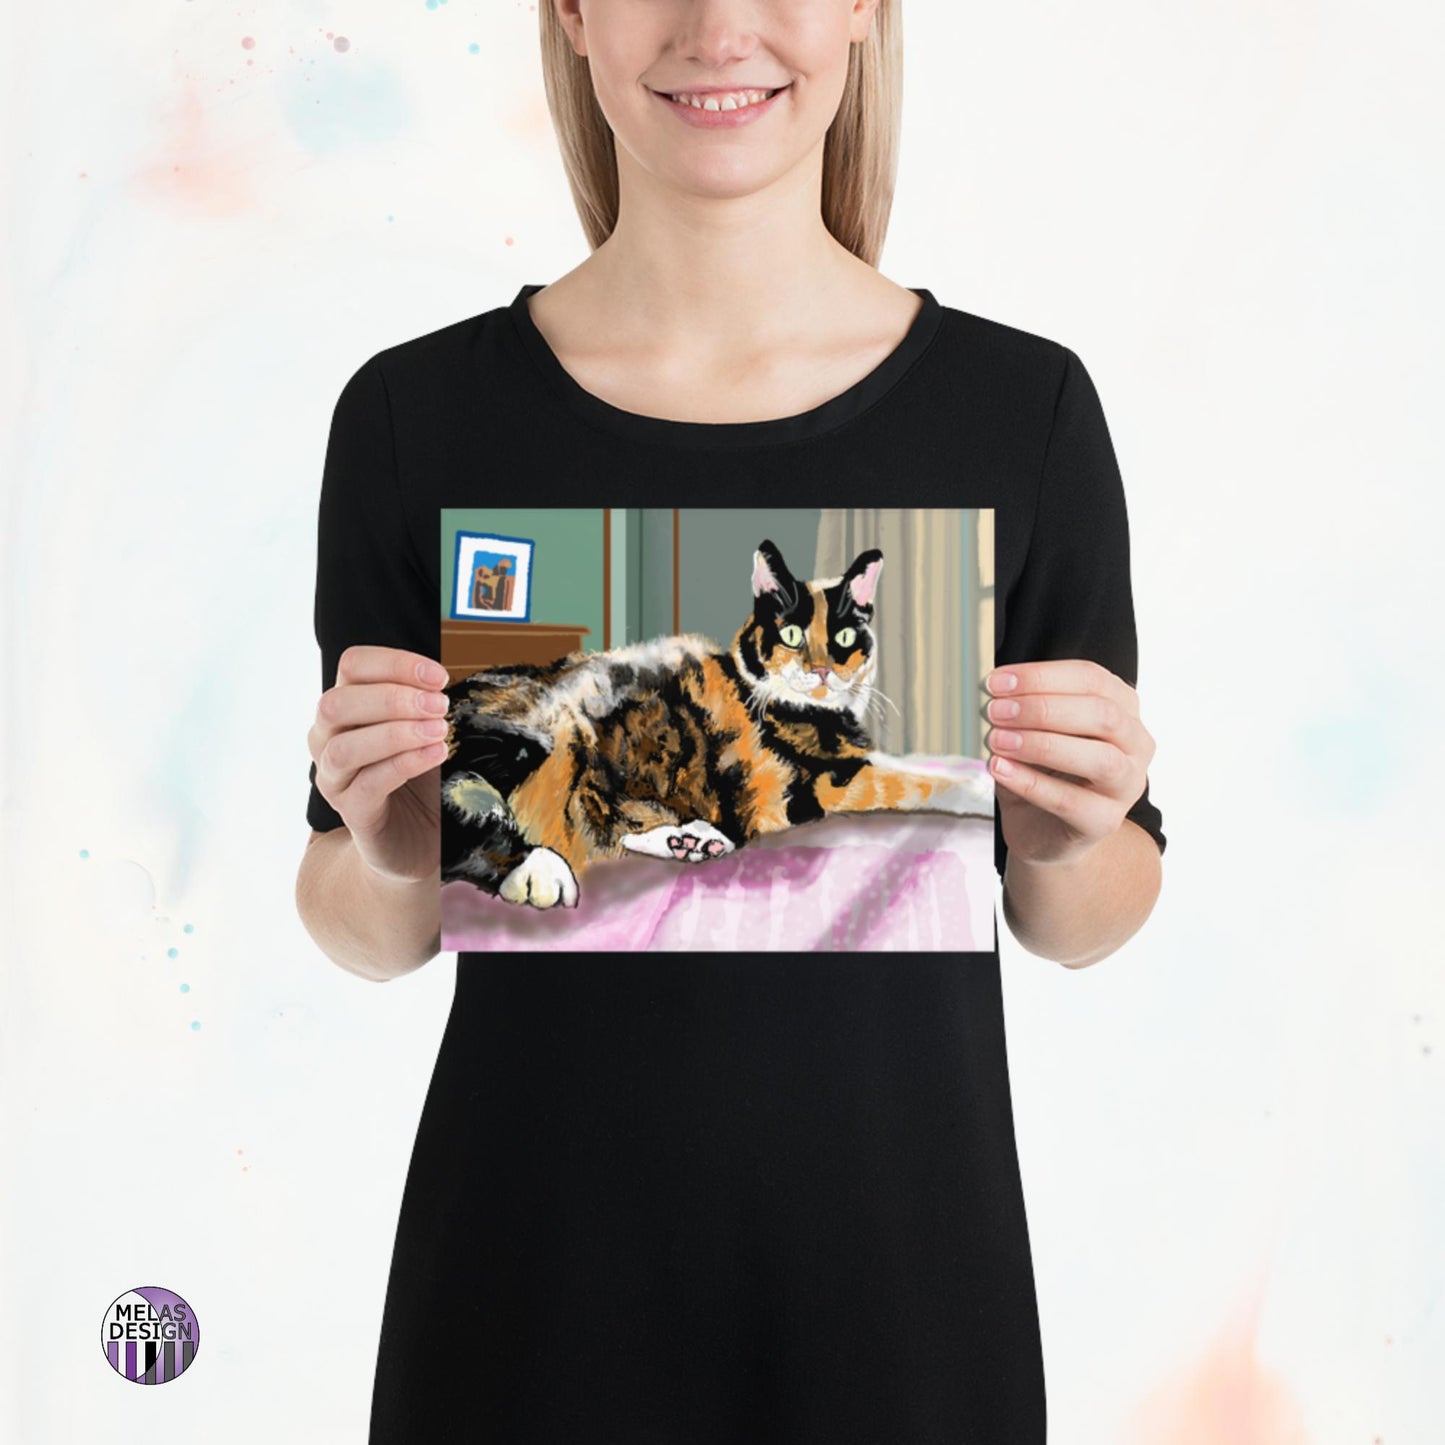 Cali Q Kitten Pet Portrait Art Print